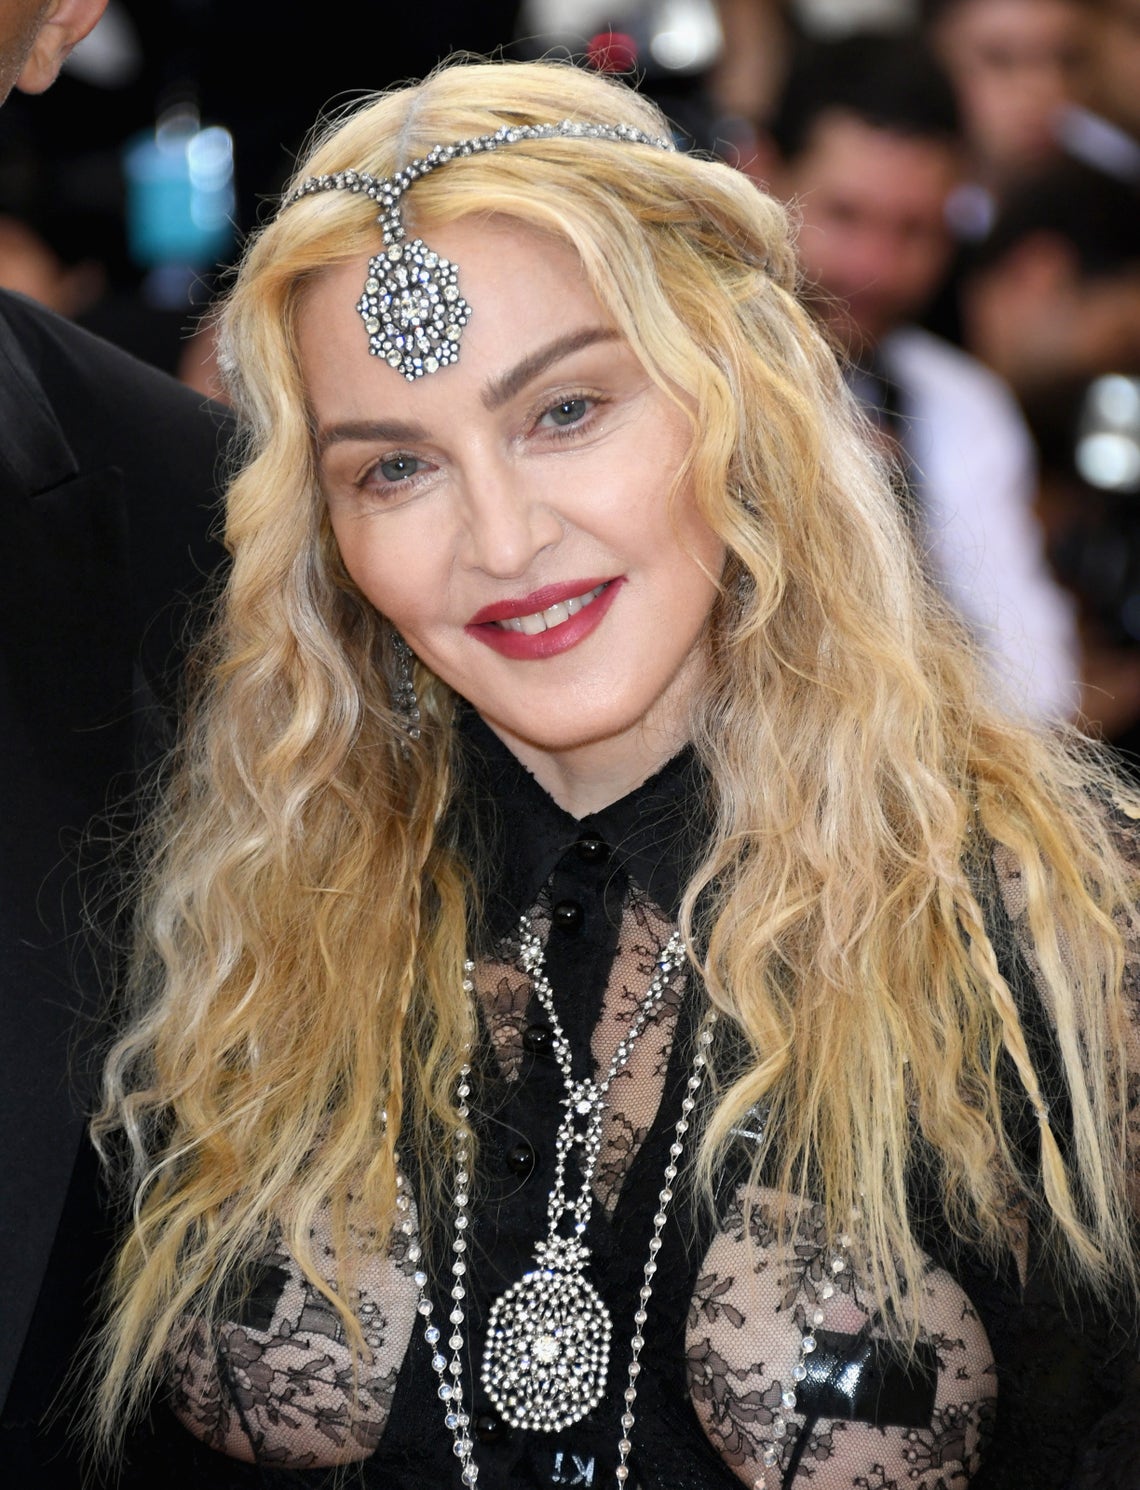 Madonna attends the Met Gala at the Metropolitan Museum of Art in